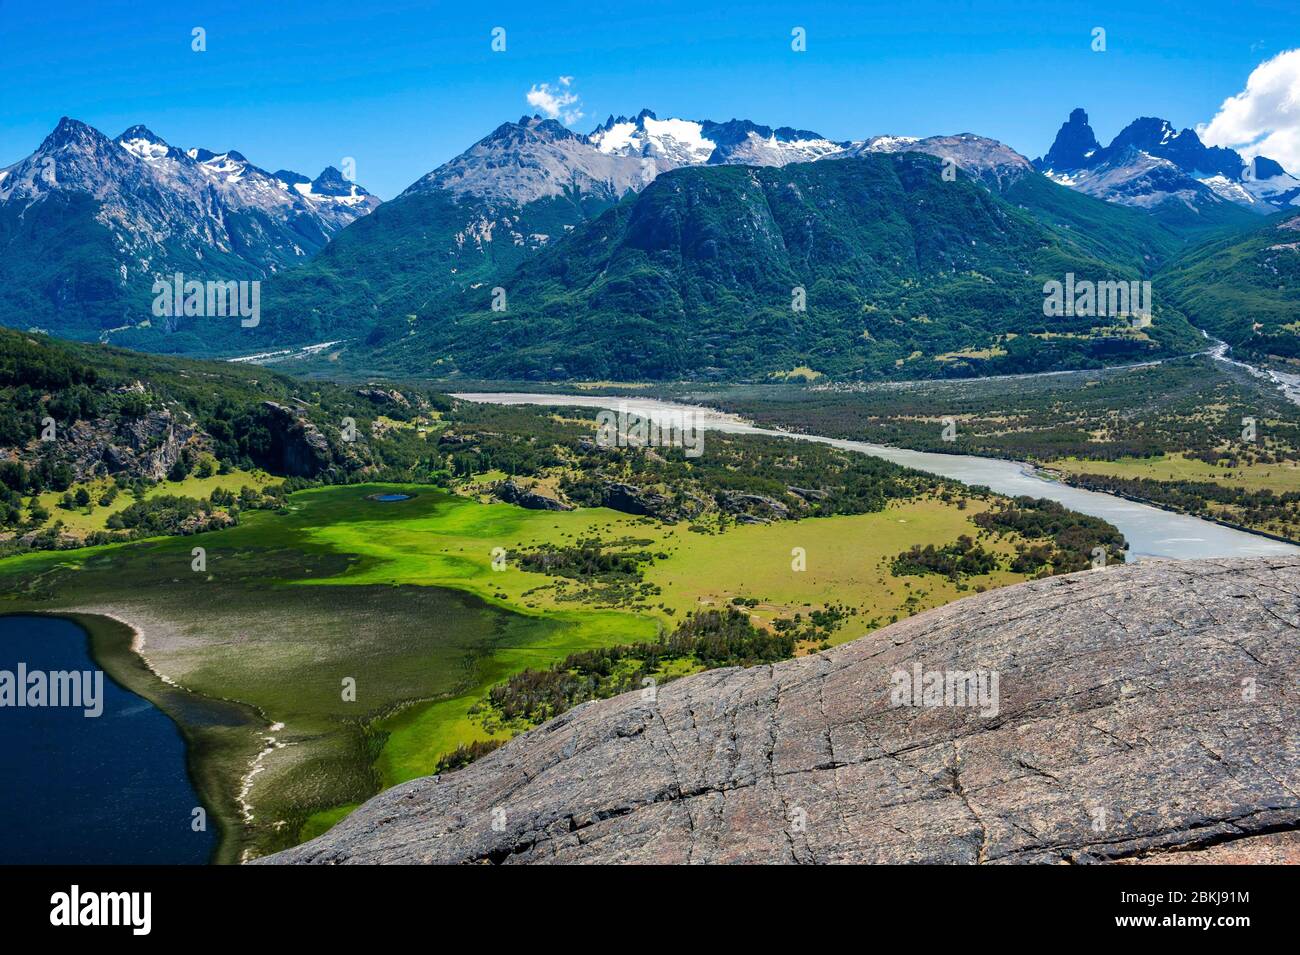 Chile, Patagonia, Aysen, Coyhaique, Balmaceda, Cerro Castillo National Park Stock Photo